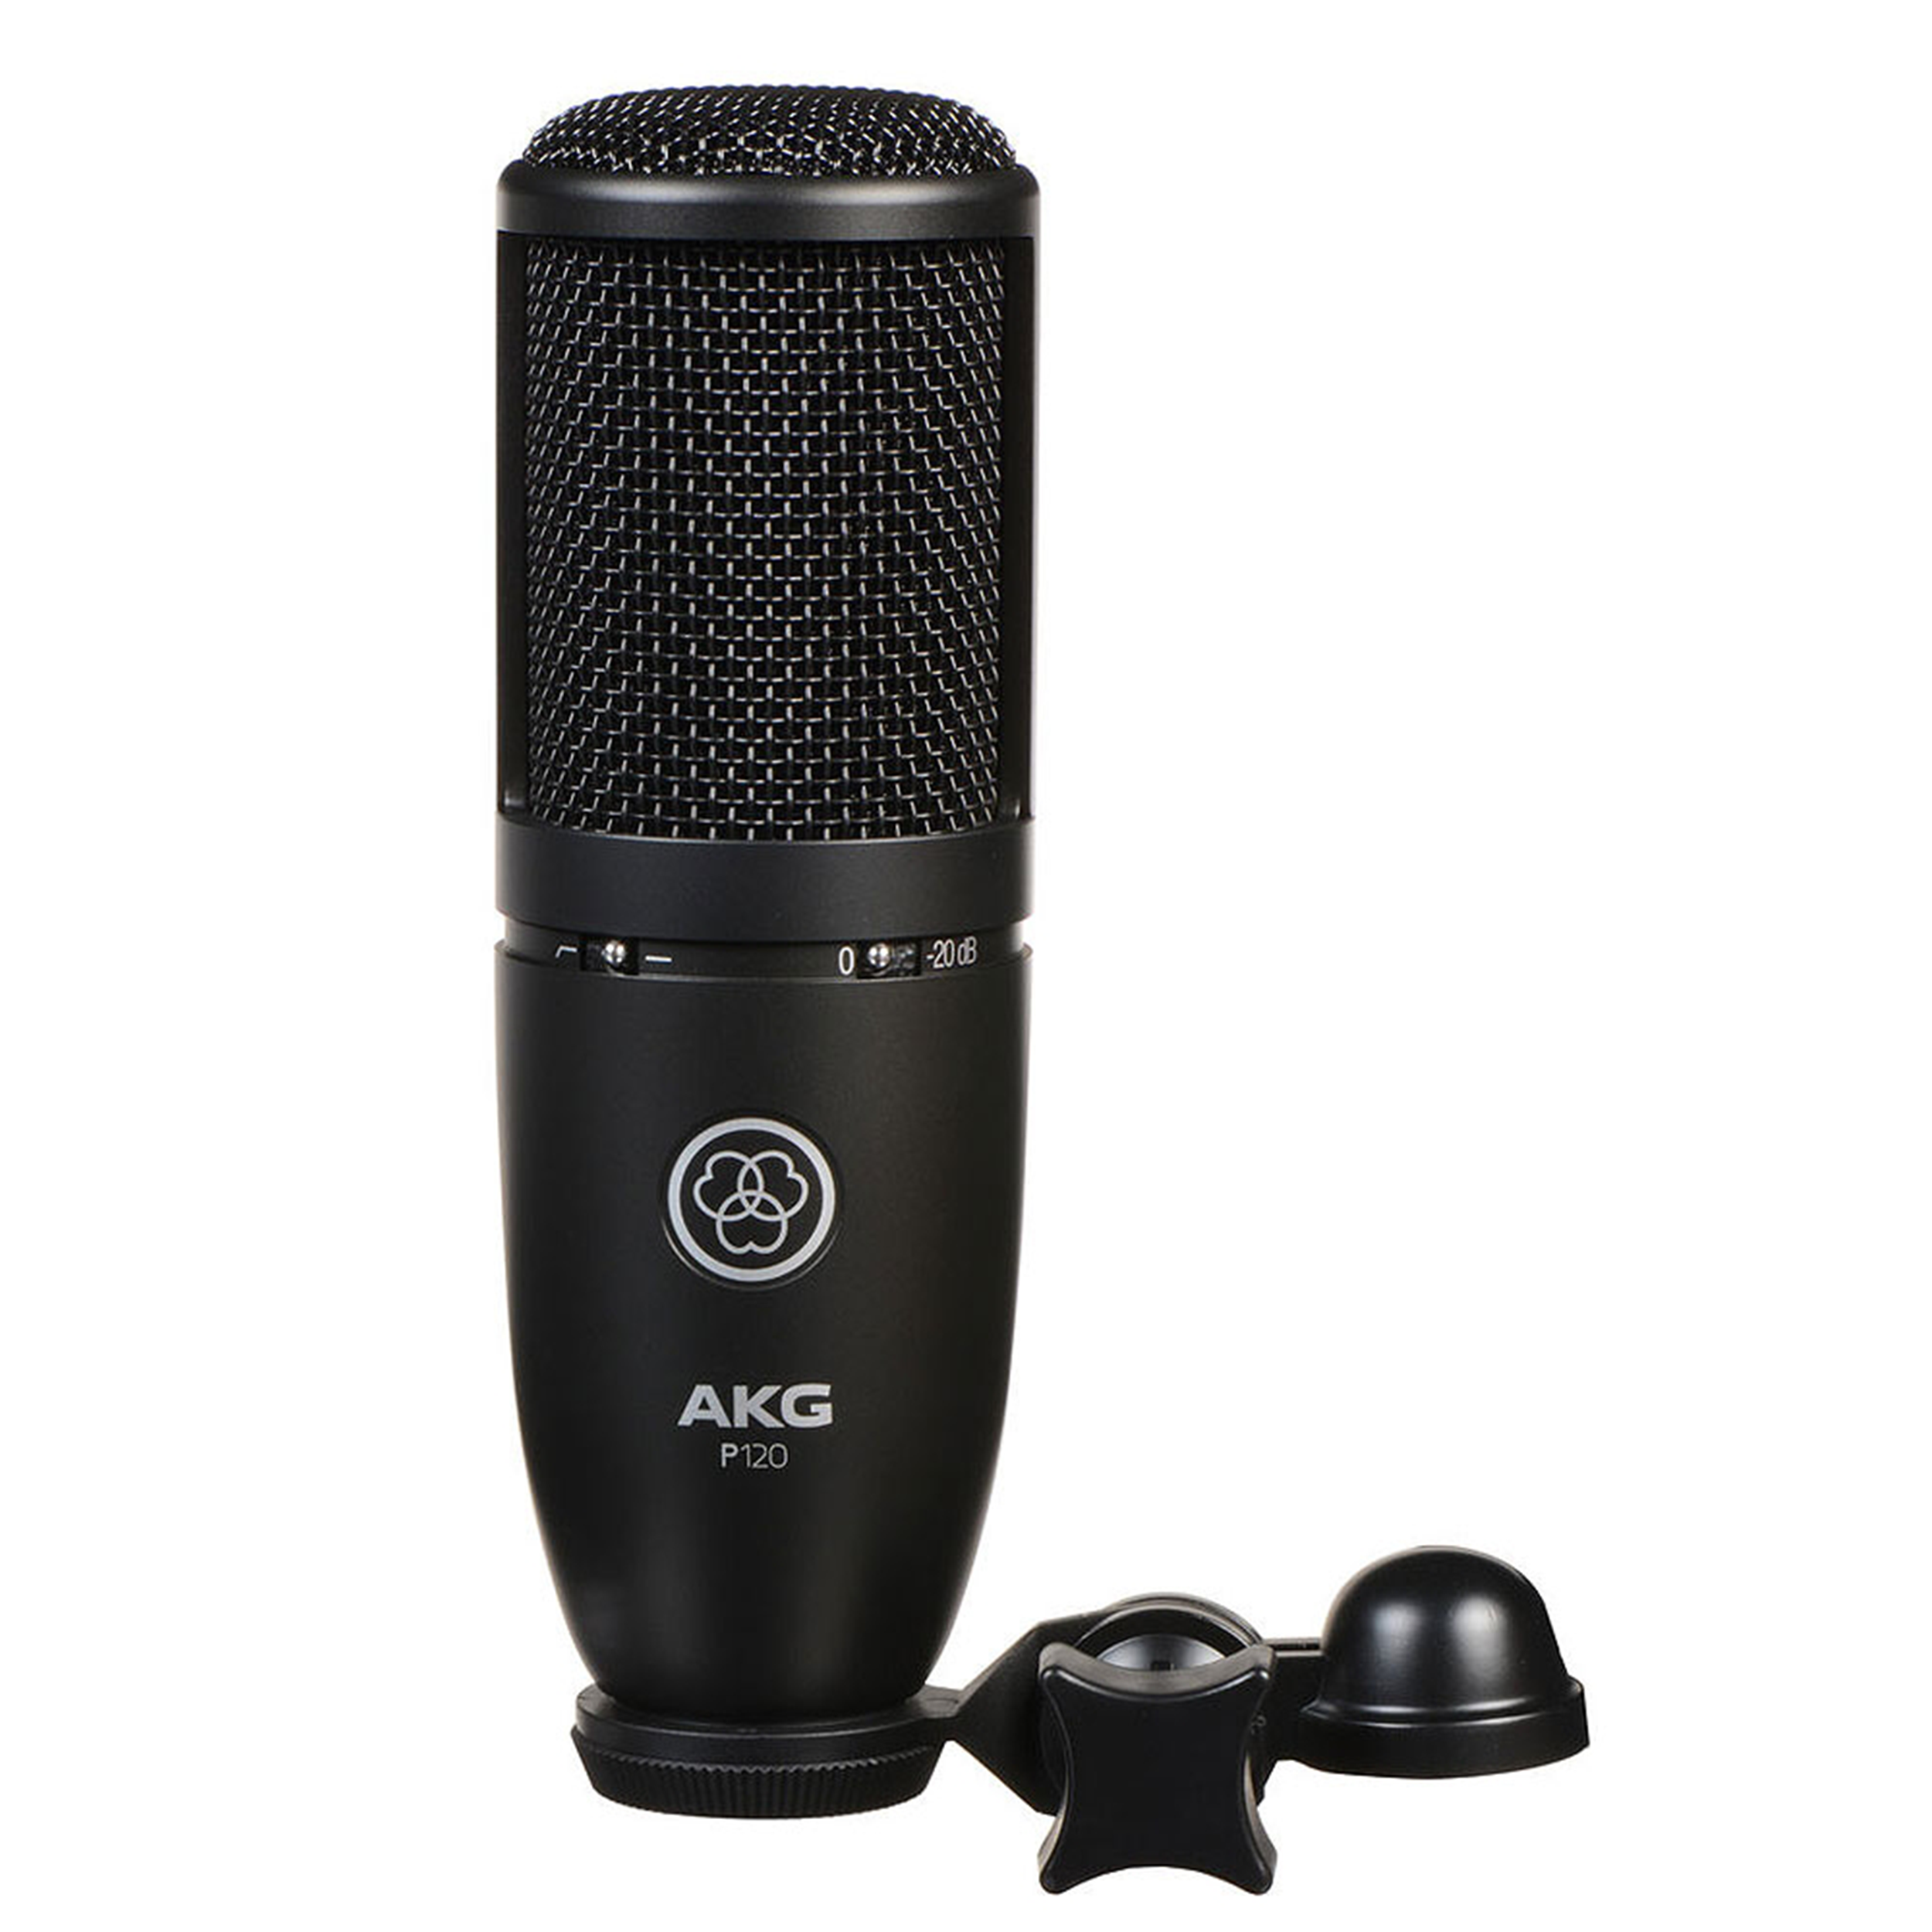 AKG P120 Studio Condenser Microphone - New,Black